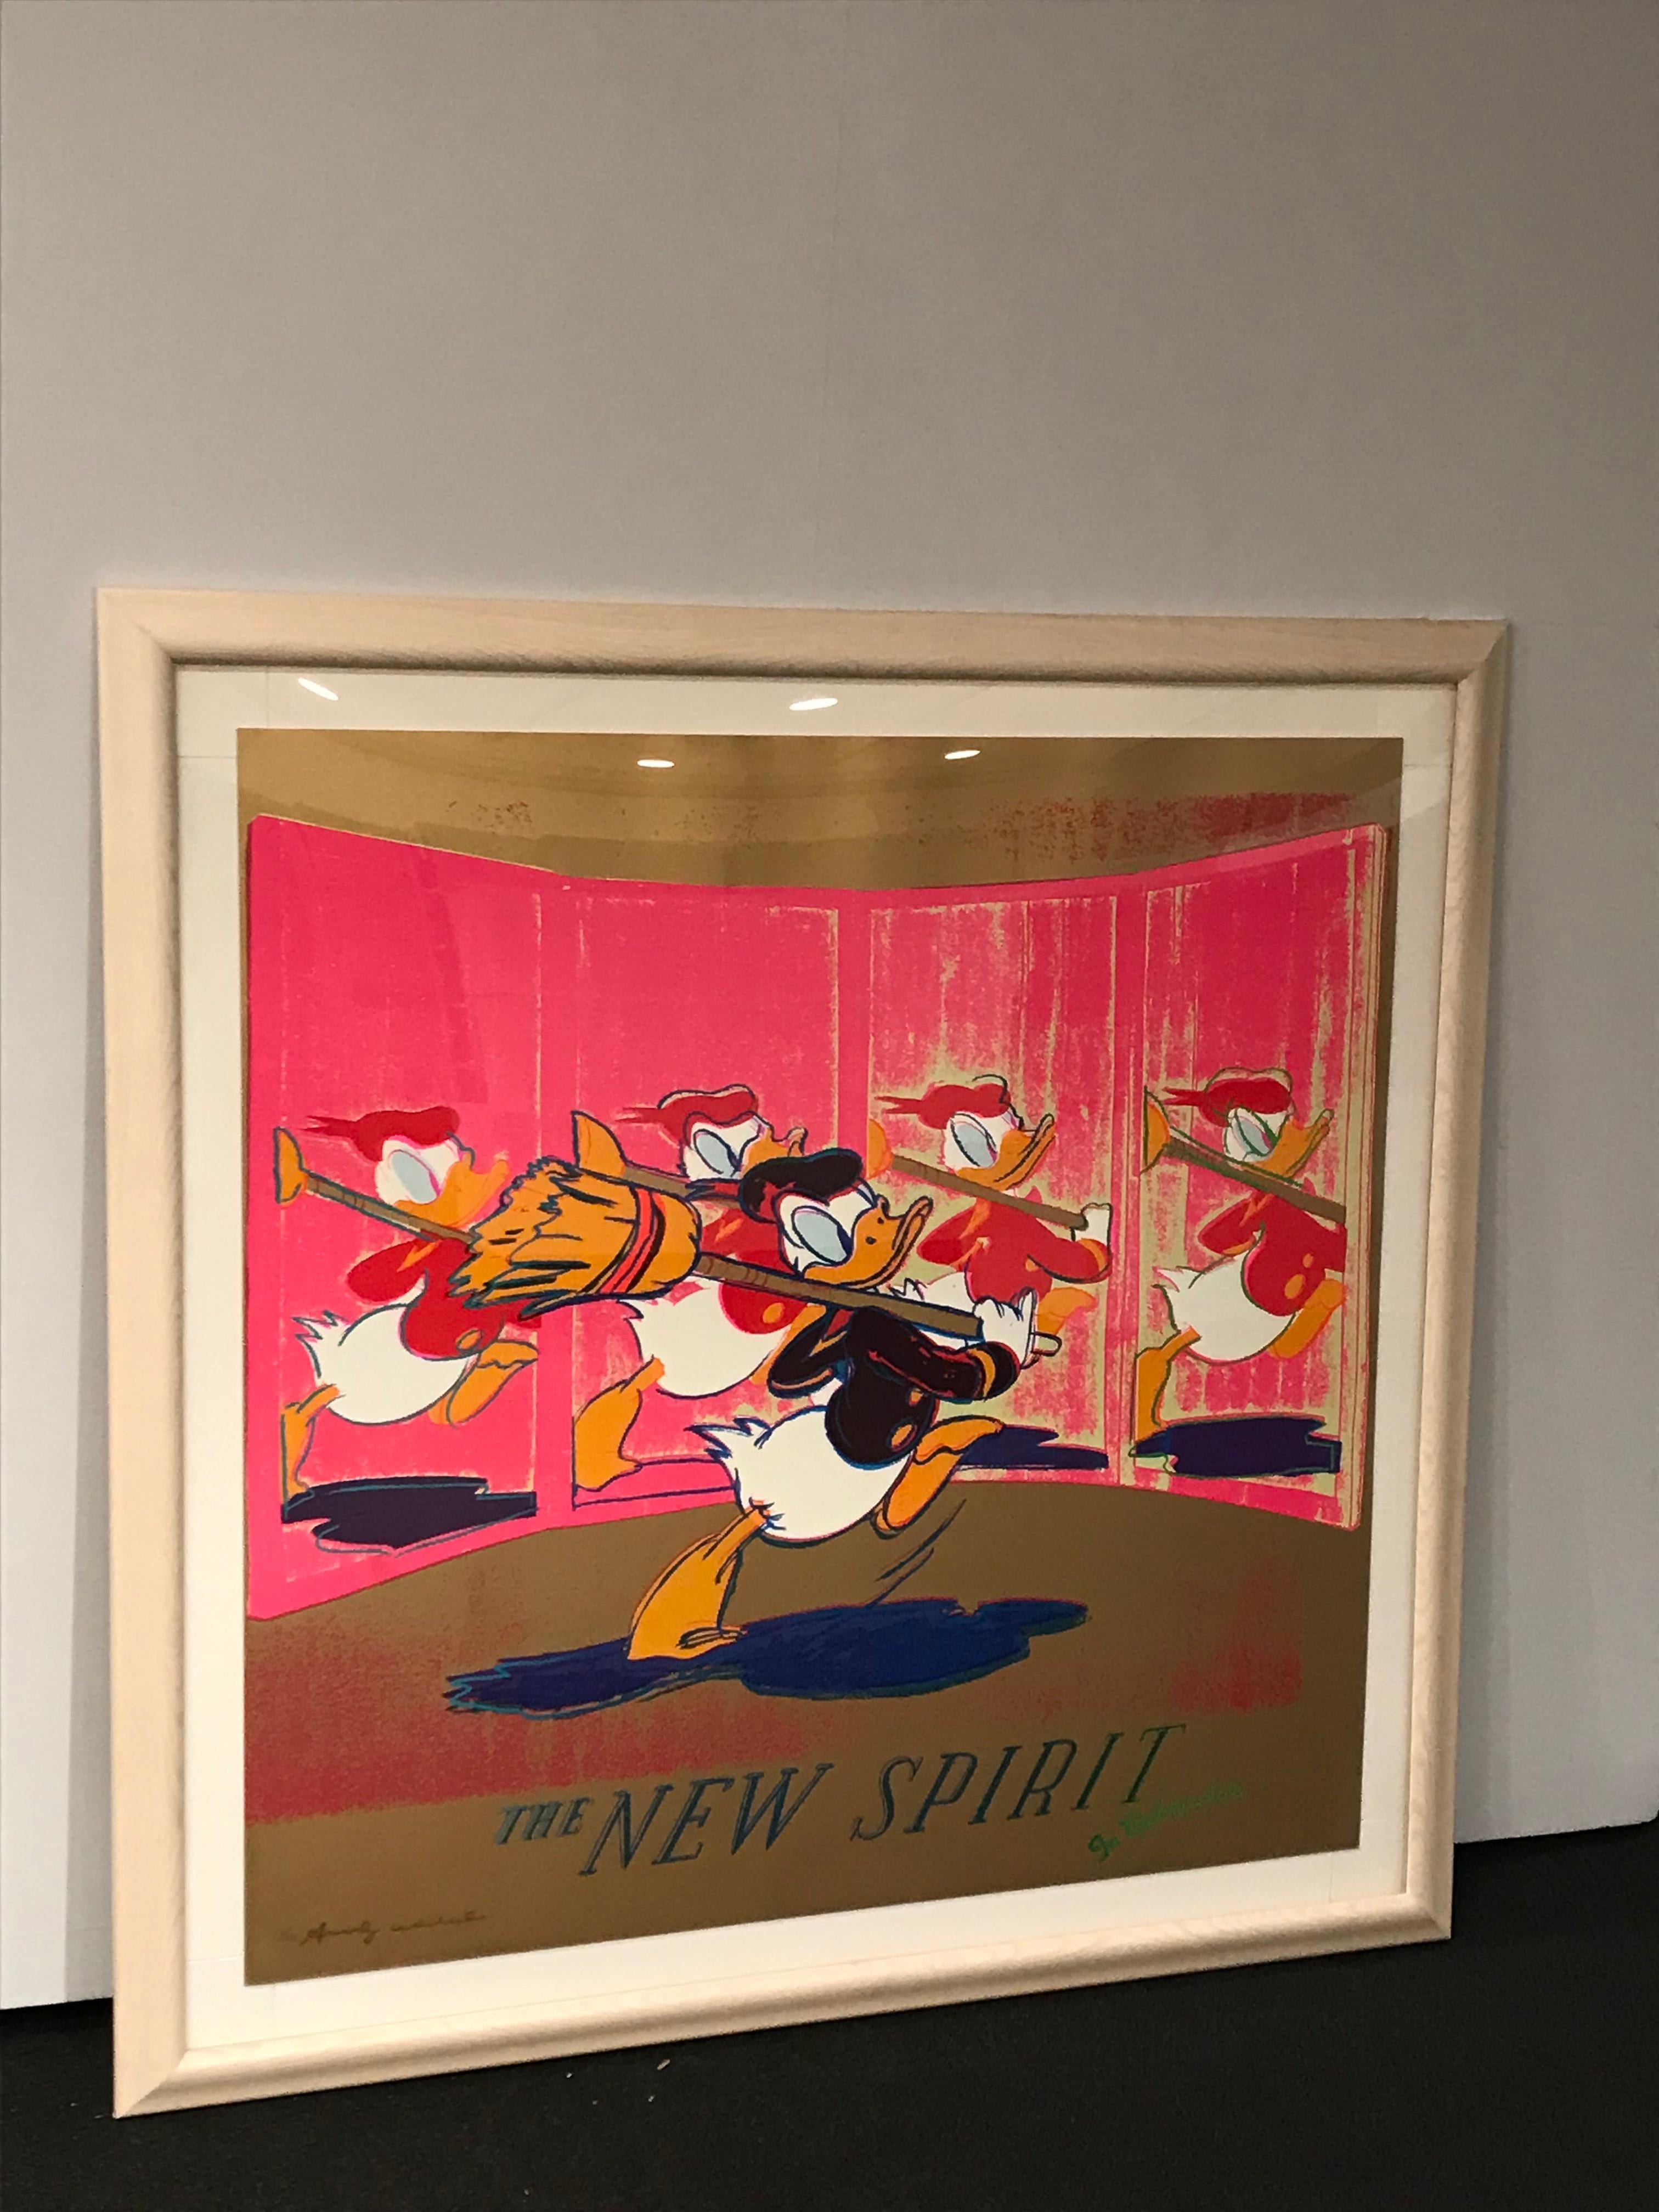 The New Spirit (Donald Duck) F&S II.357 - Pop Art Print by Andy Warhol